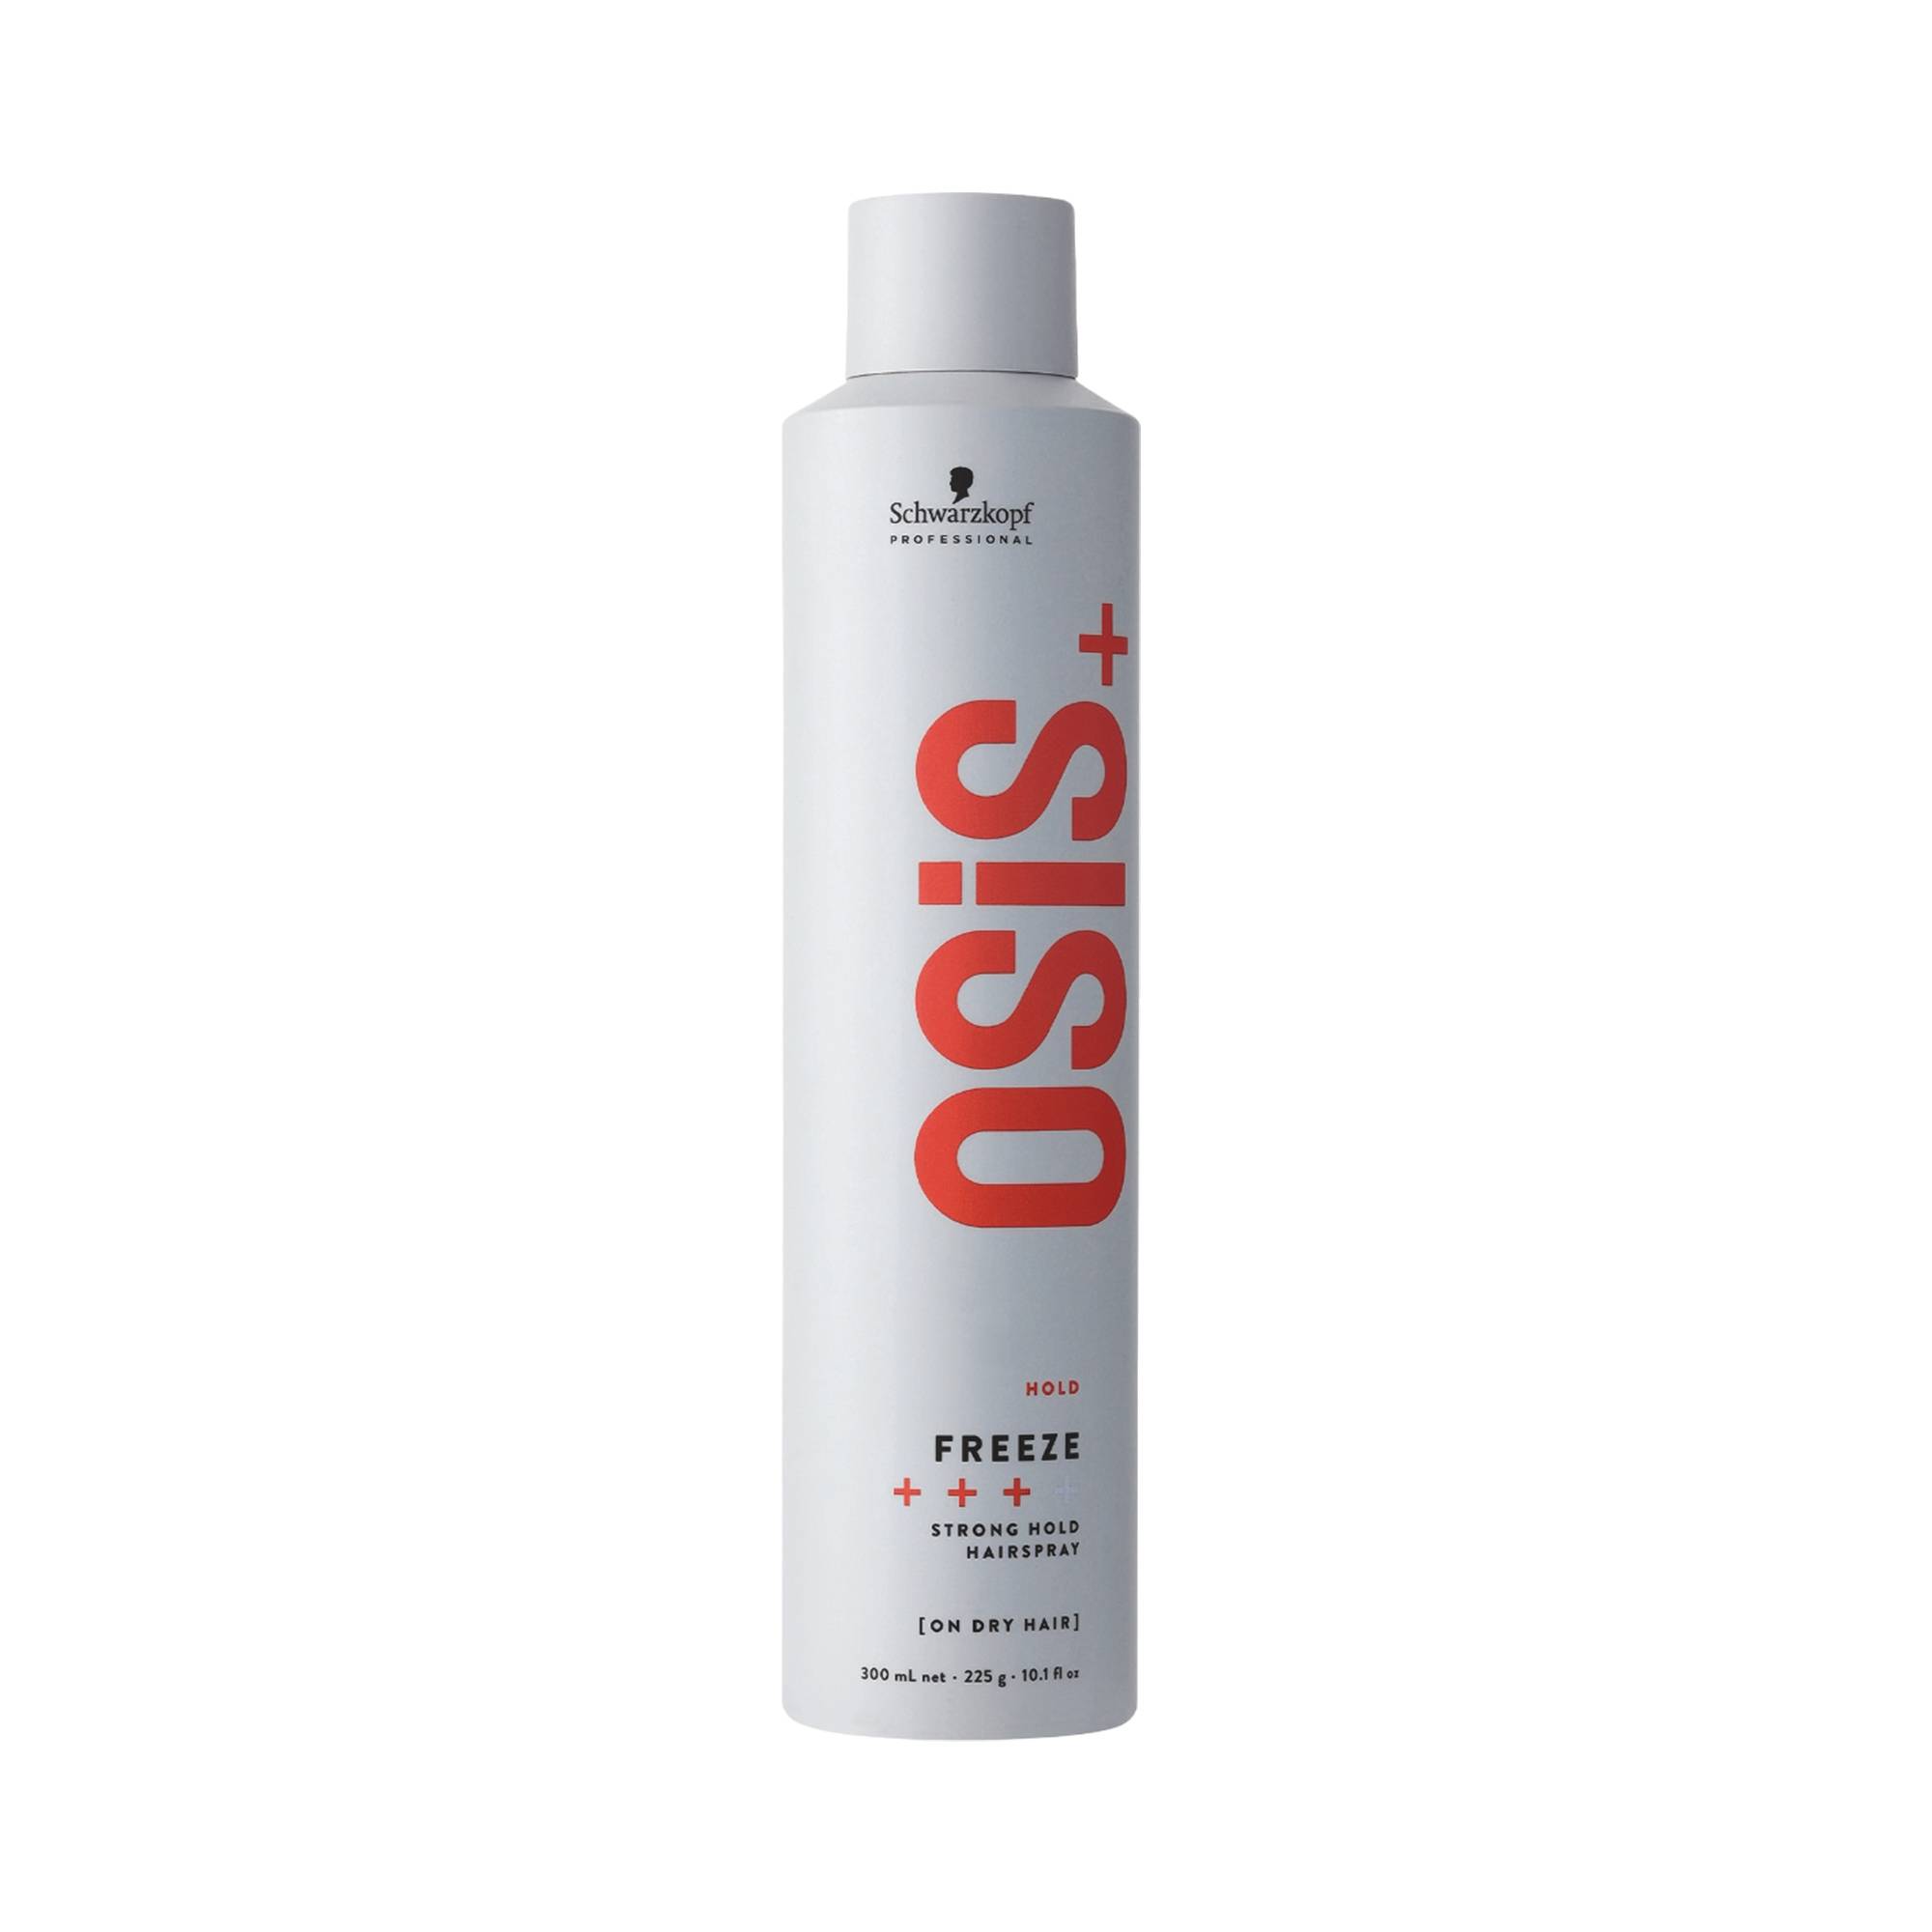 Spray fixation forte Osis+ Freeze de la marque Schwarzkopf Professional Contenance 300ml - 1